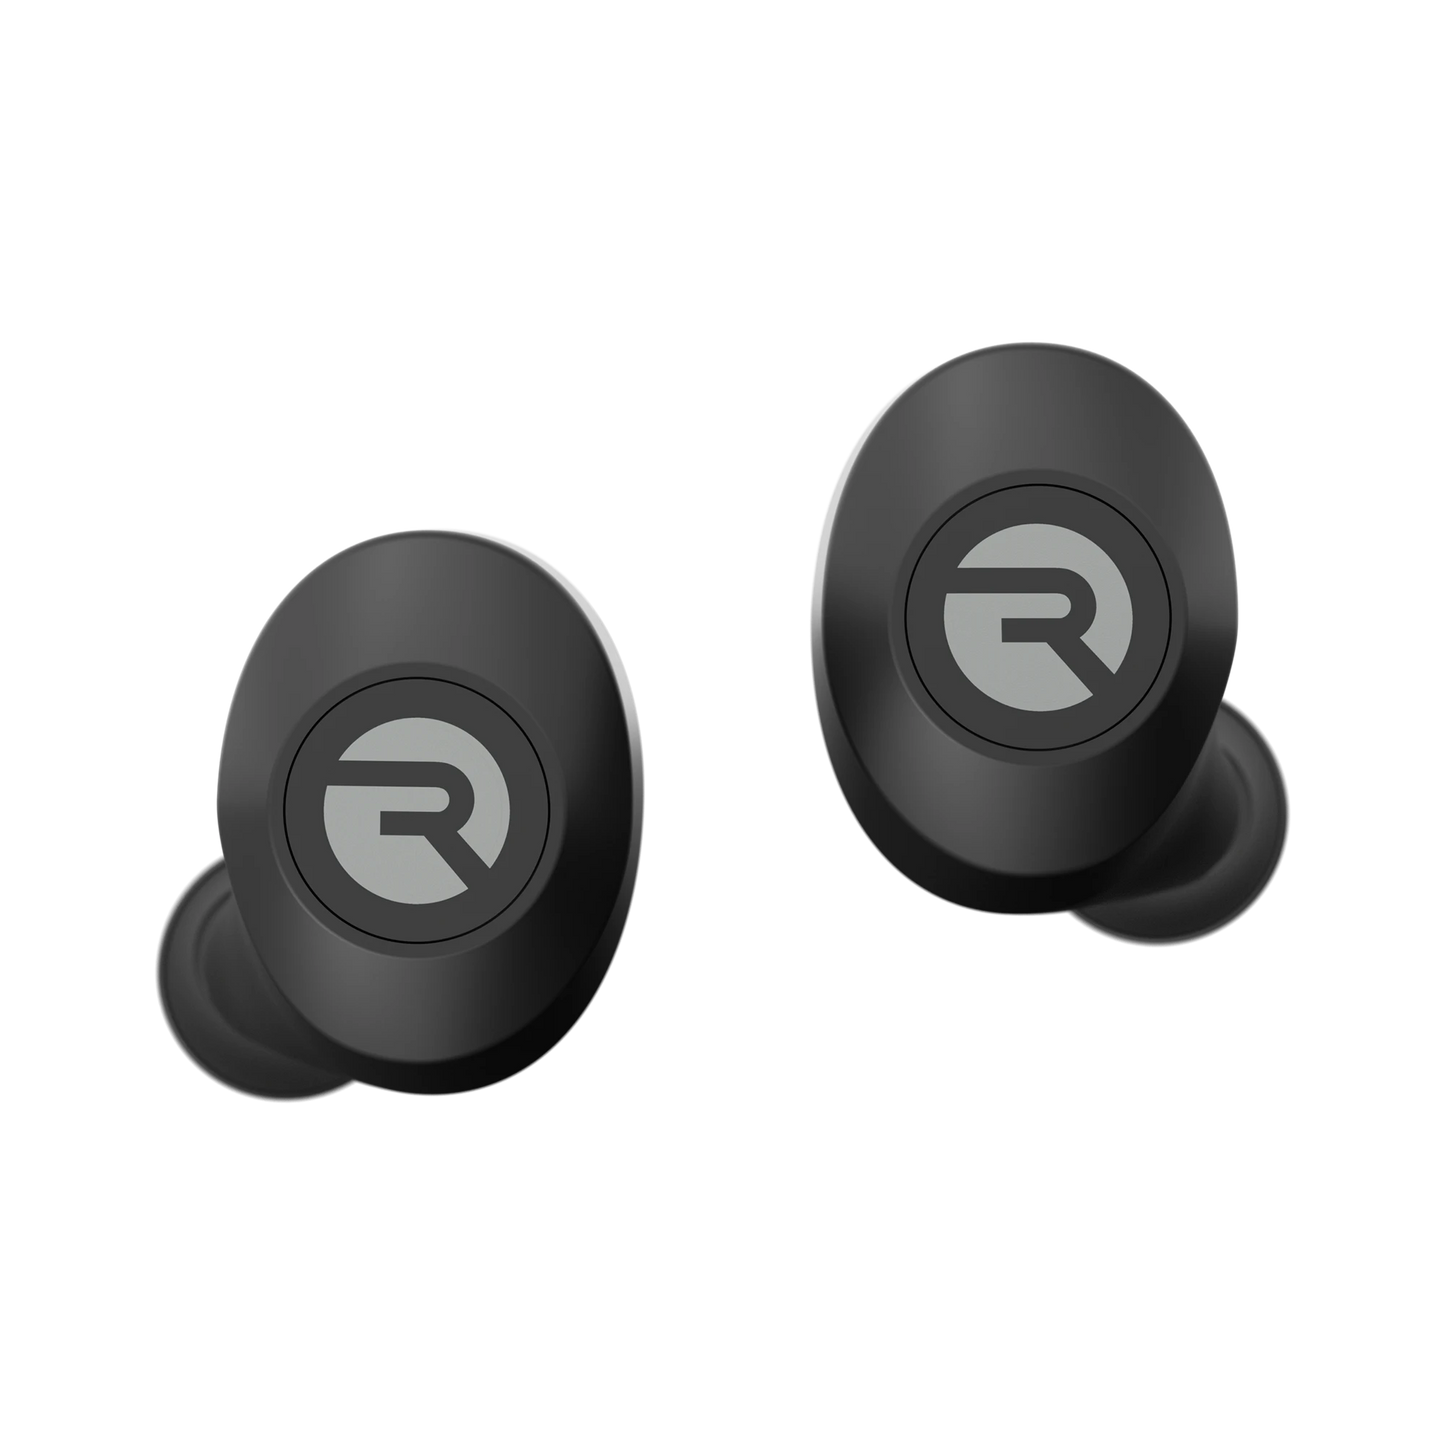 Apple - Smart Charms 3D Rubber Badge Reel